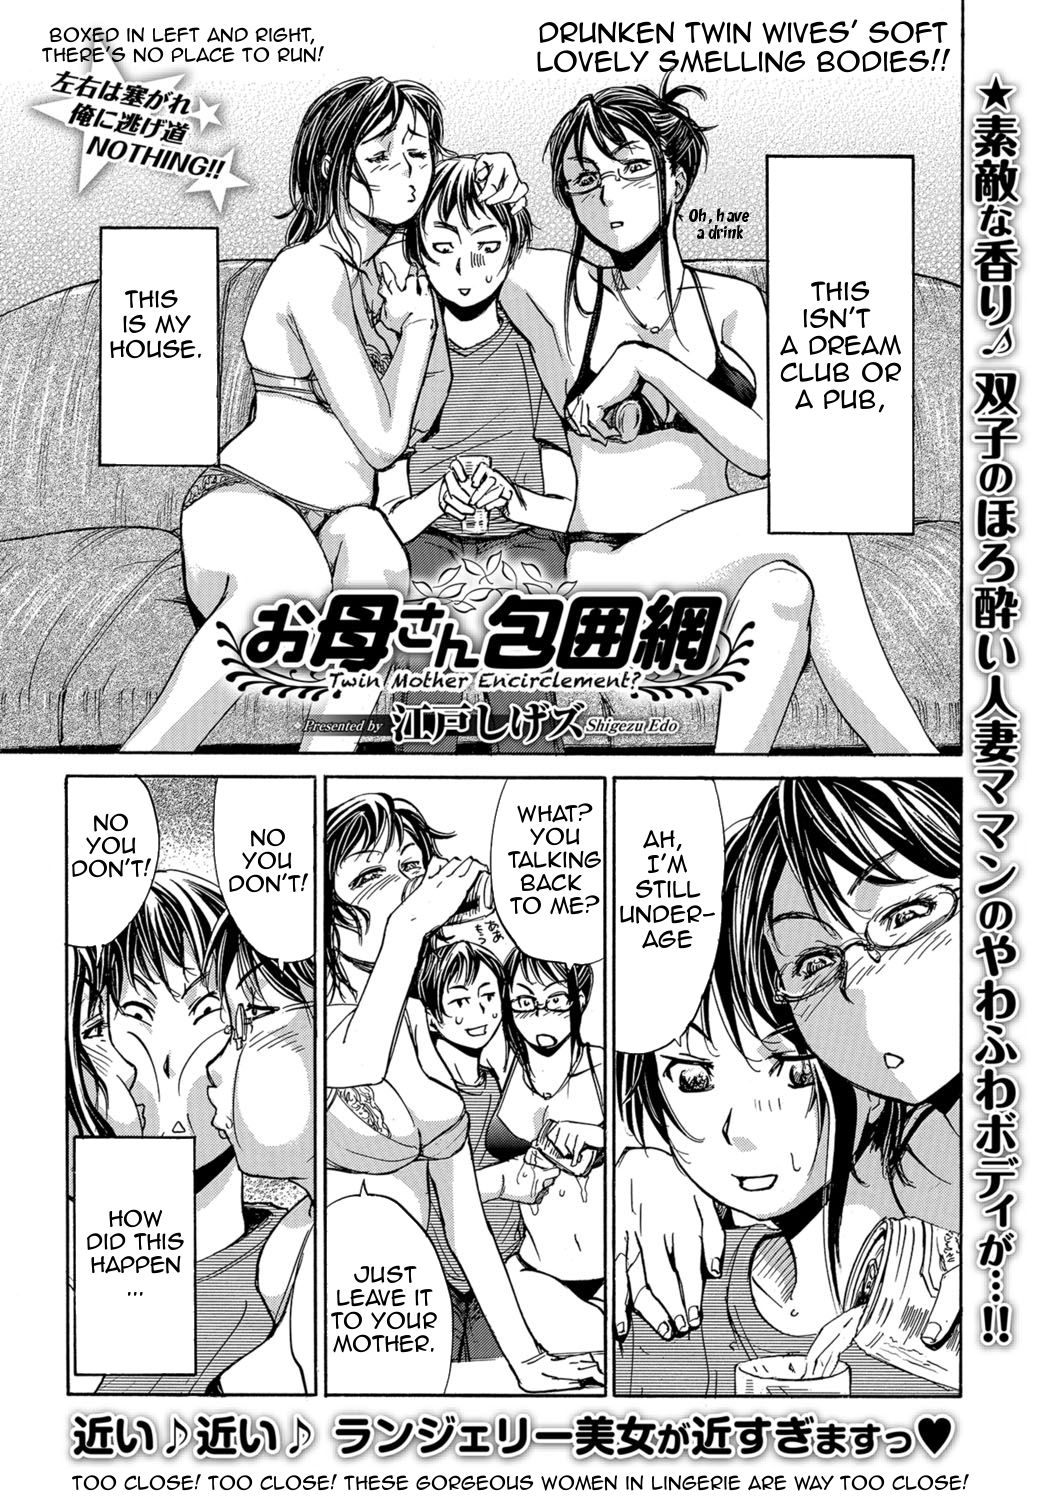 Mother Twin Porn - Twin Mother Encirclement? [Edo Shigezu] Porn Comic - AllPornComic